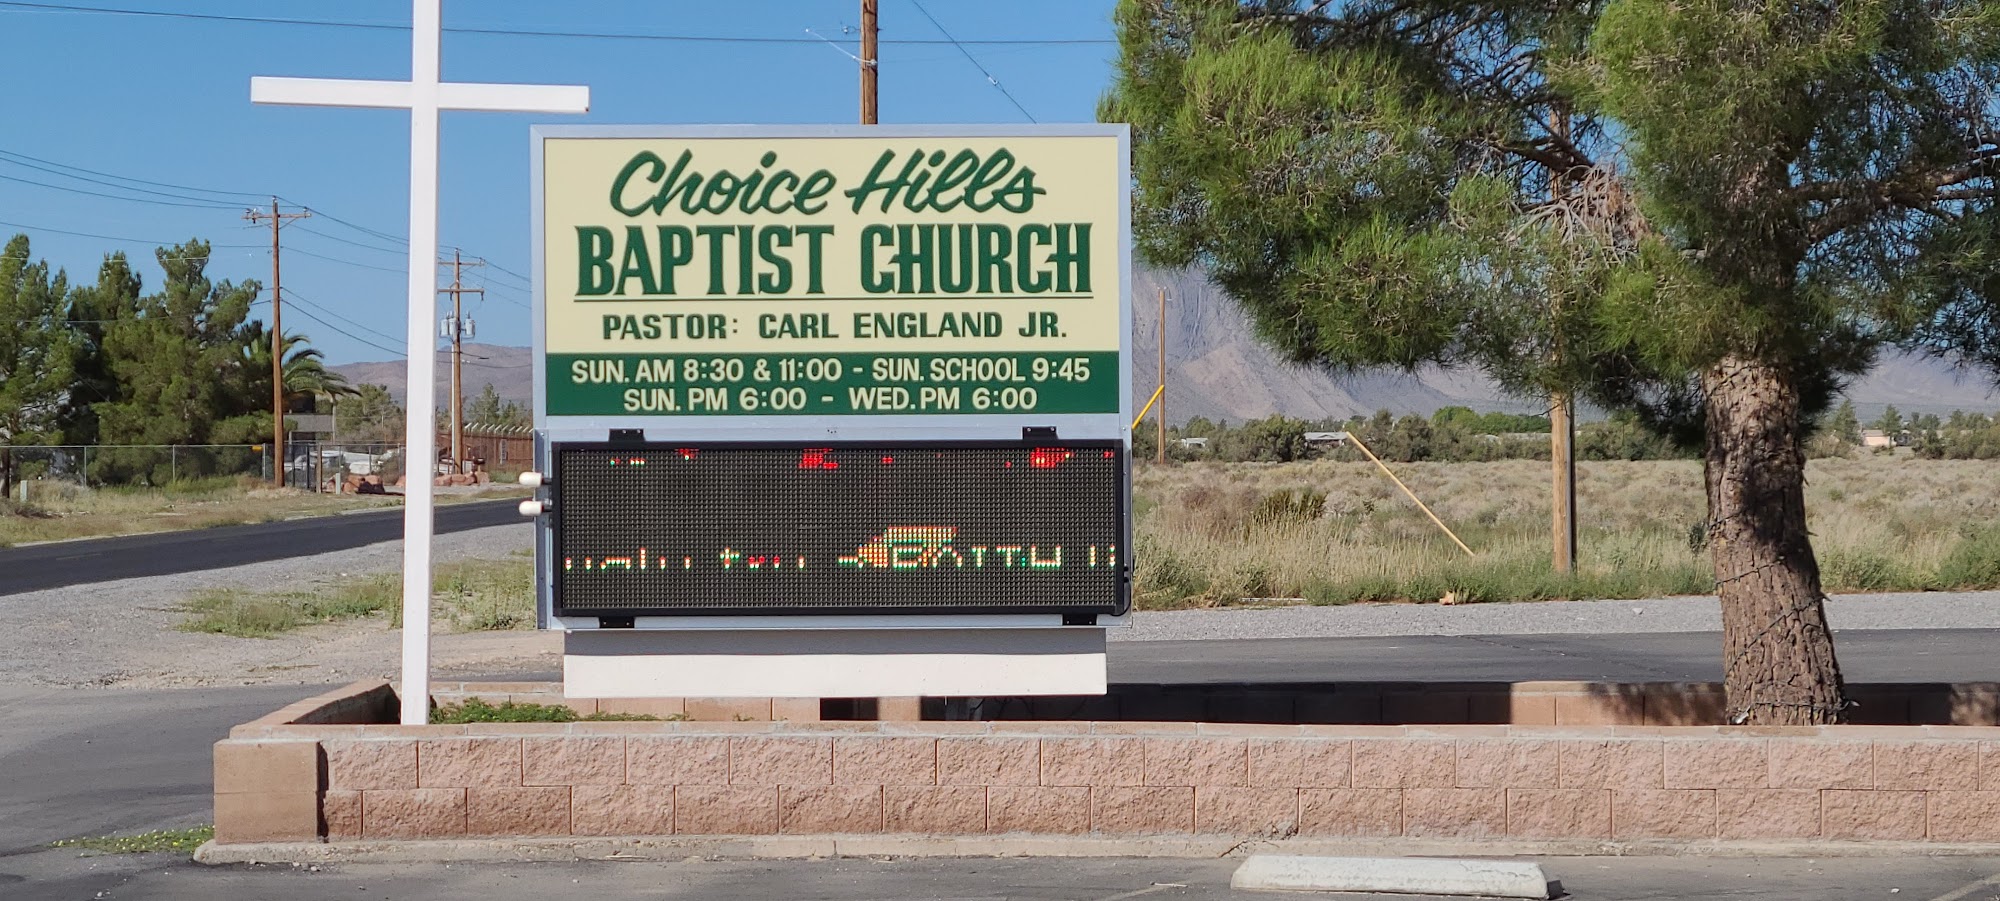 Choice Hills Baptist Church